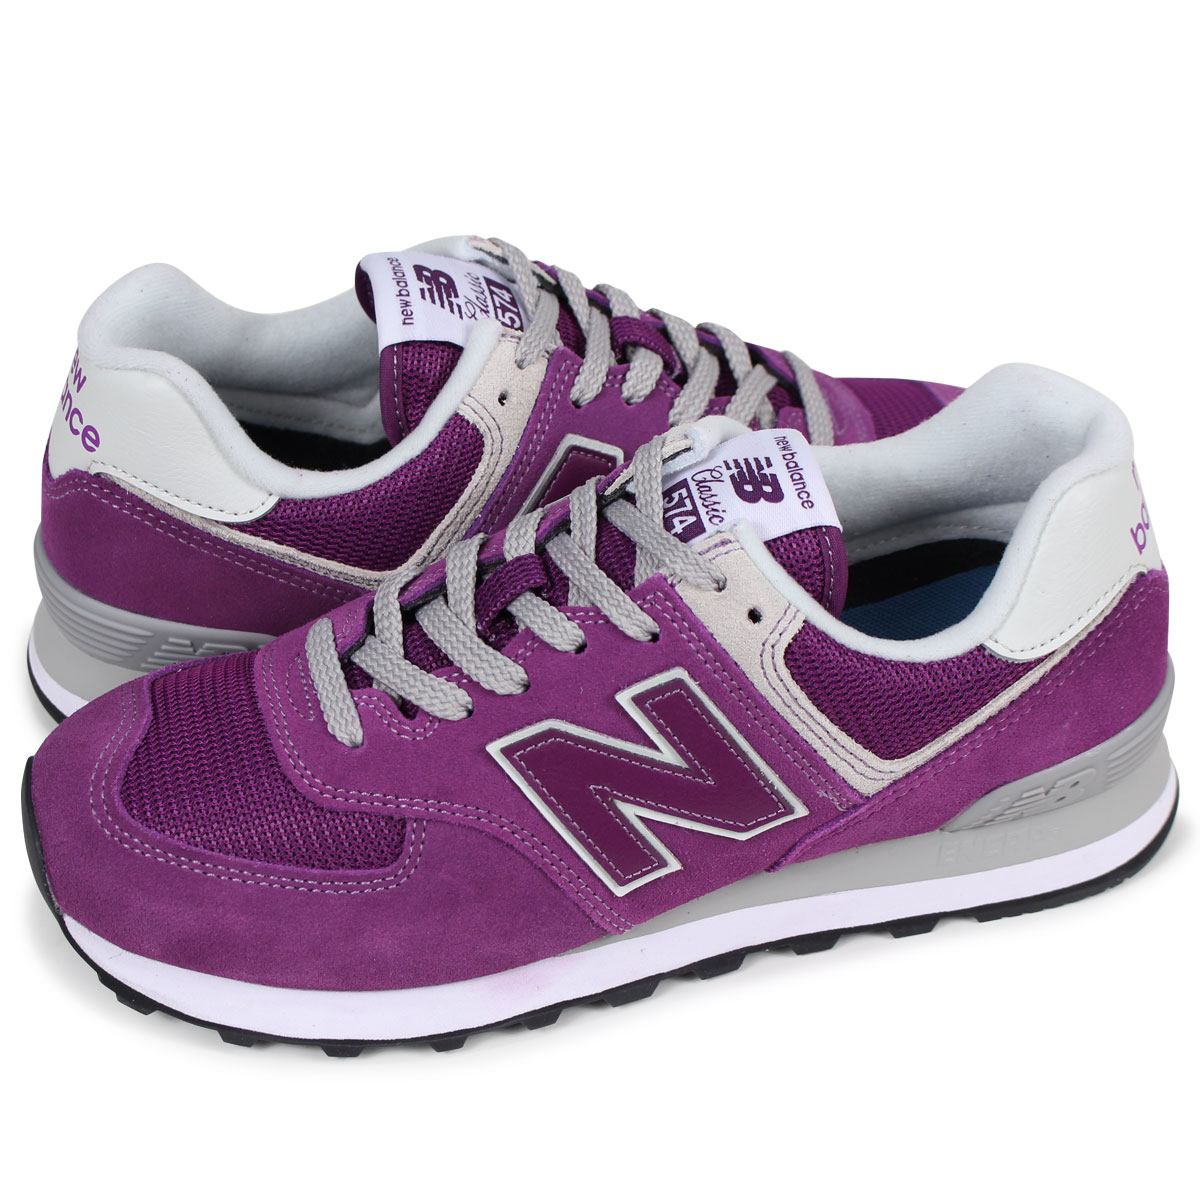 new balance 574 violet